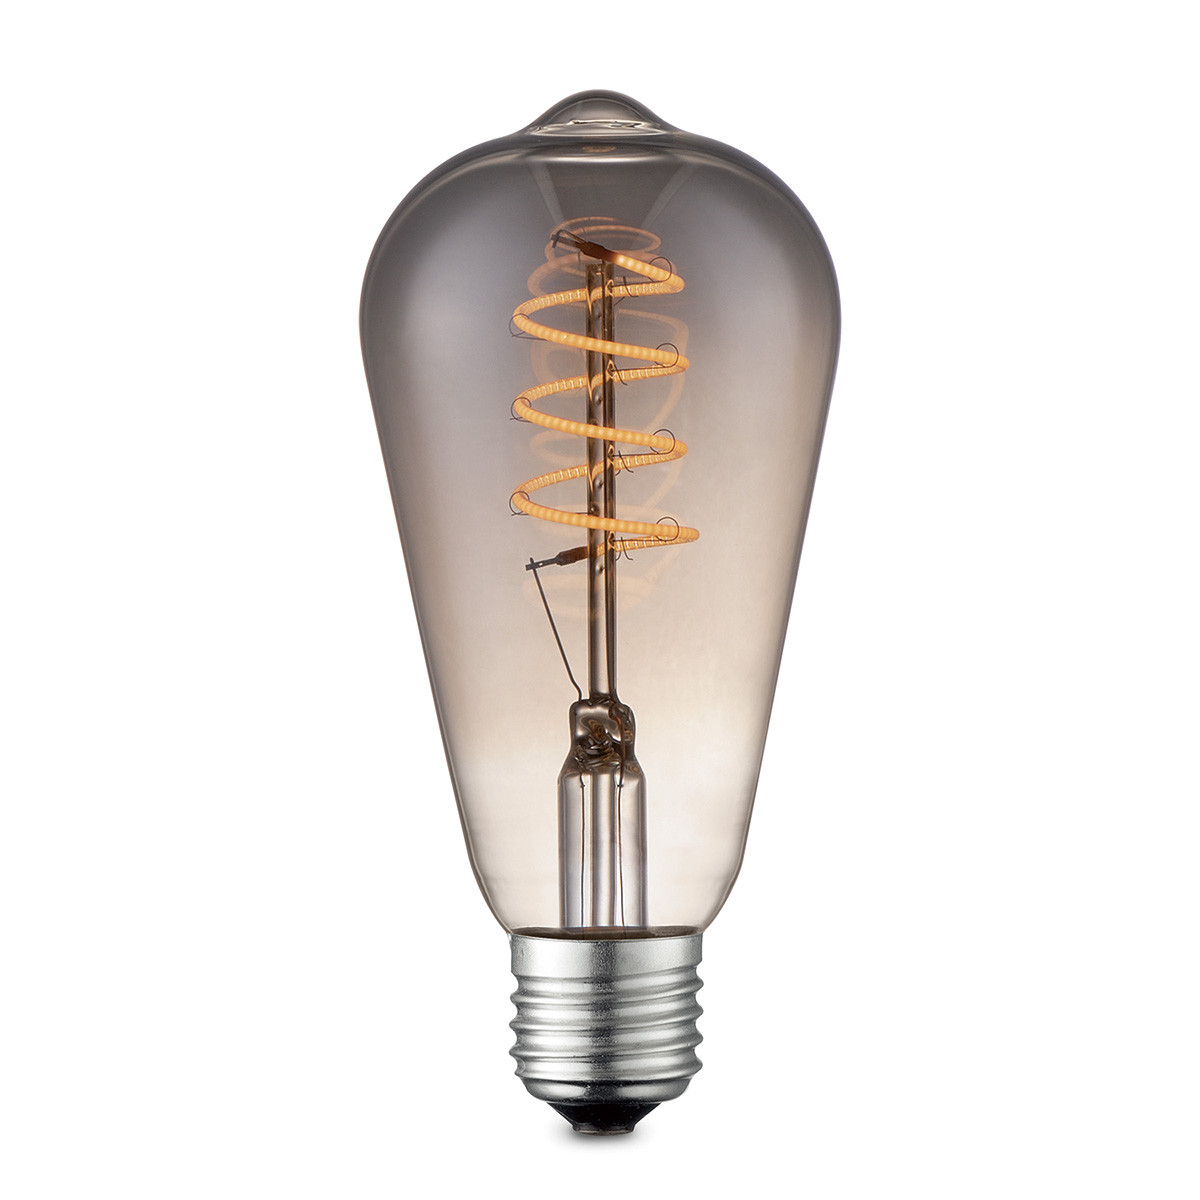 Edison Vintage LED lamp E27 LED filament lichtbron, Spiraal Drop ST64, 6.4/6.4/14cm, Rook, Retro LED lamp Dimbaar, 4W 100lm 1800K, warm wit licht, geschikt voor E27 fitting